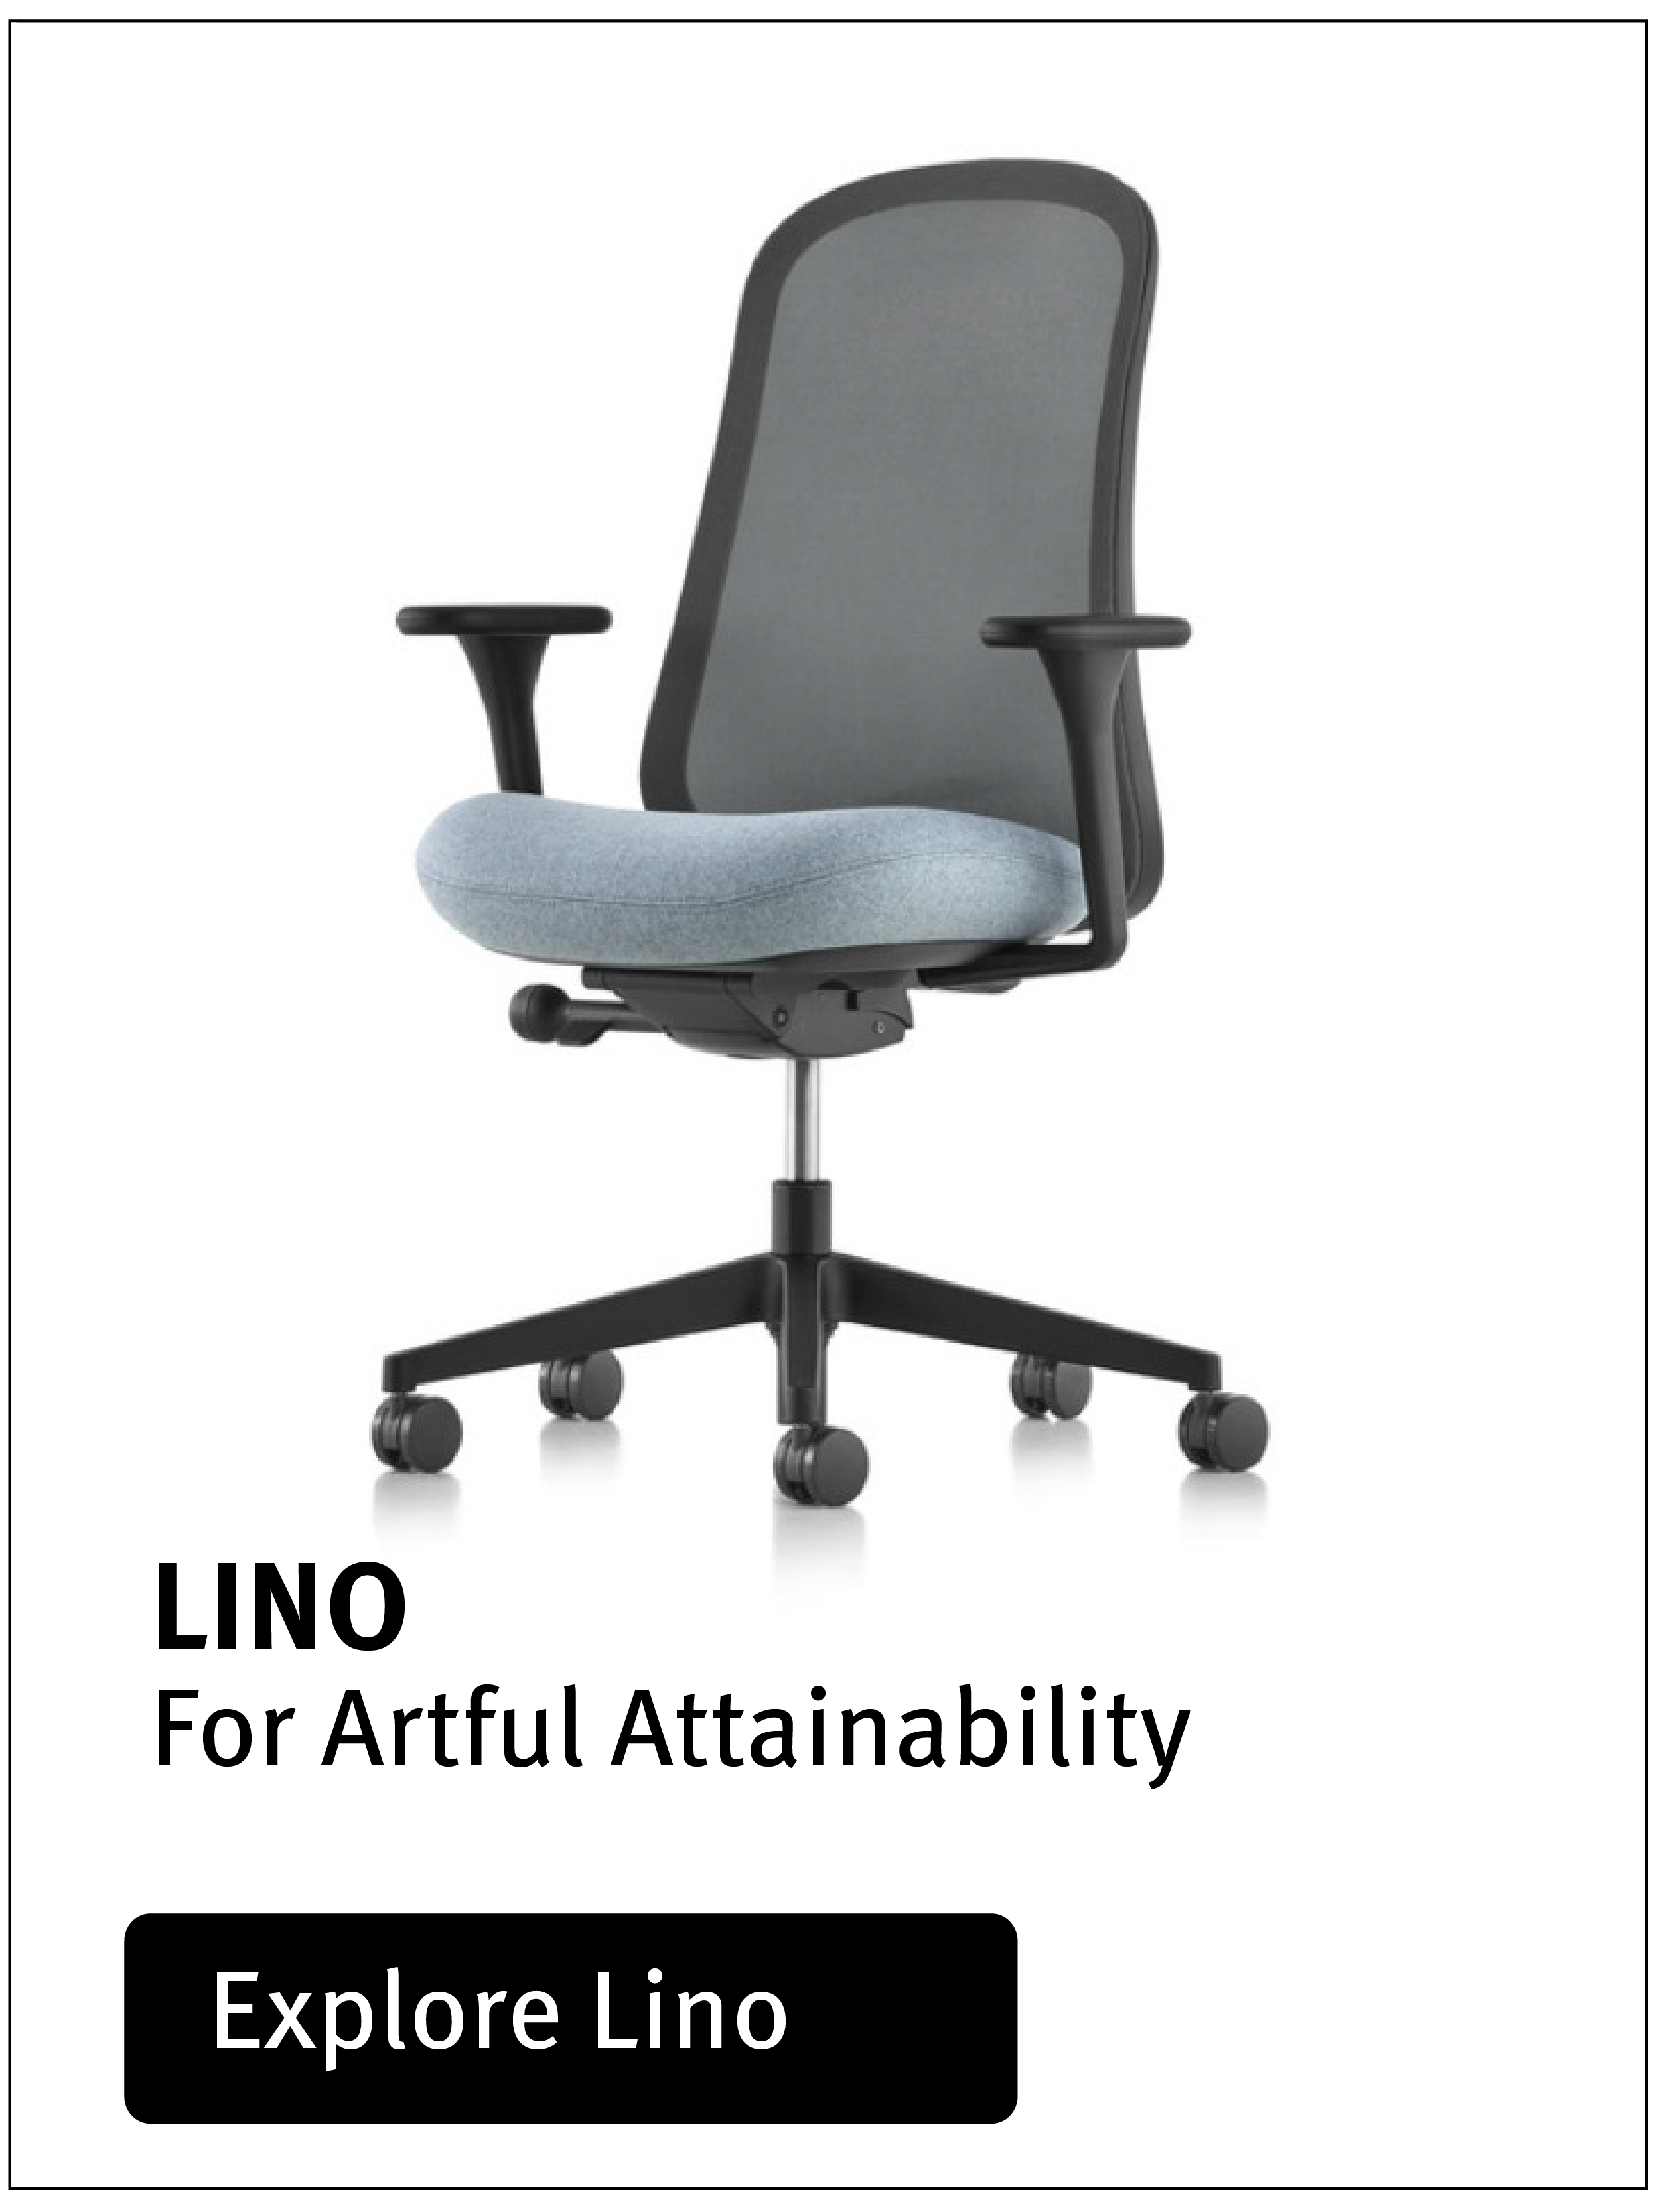 Lino chair by Herman Miller